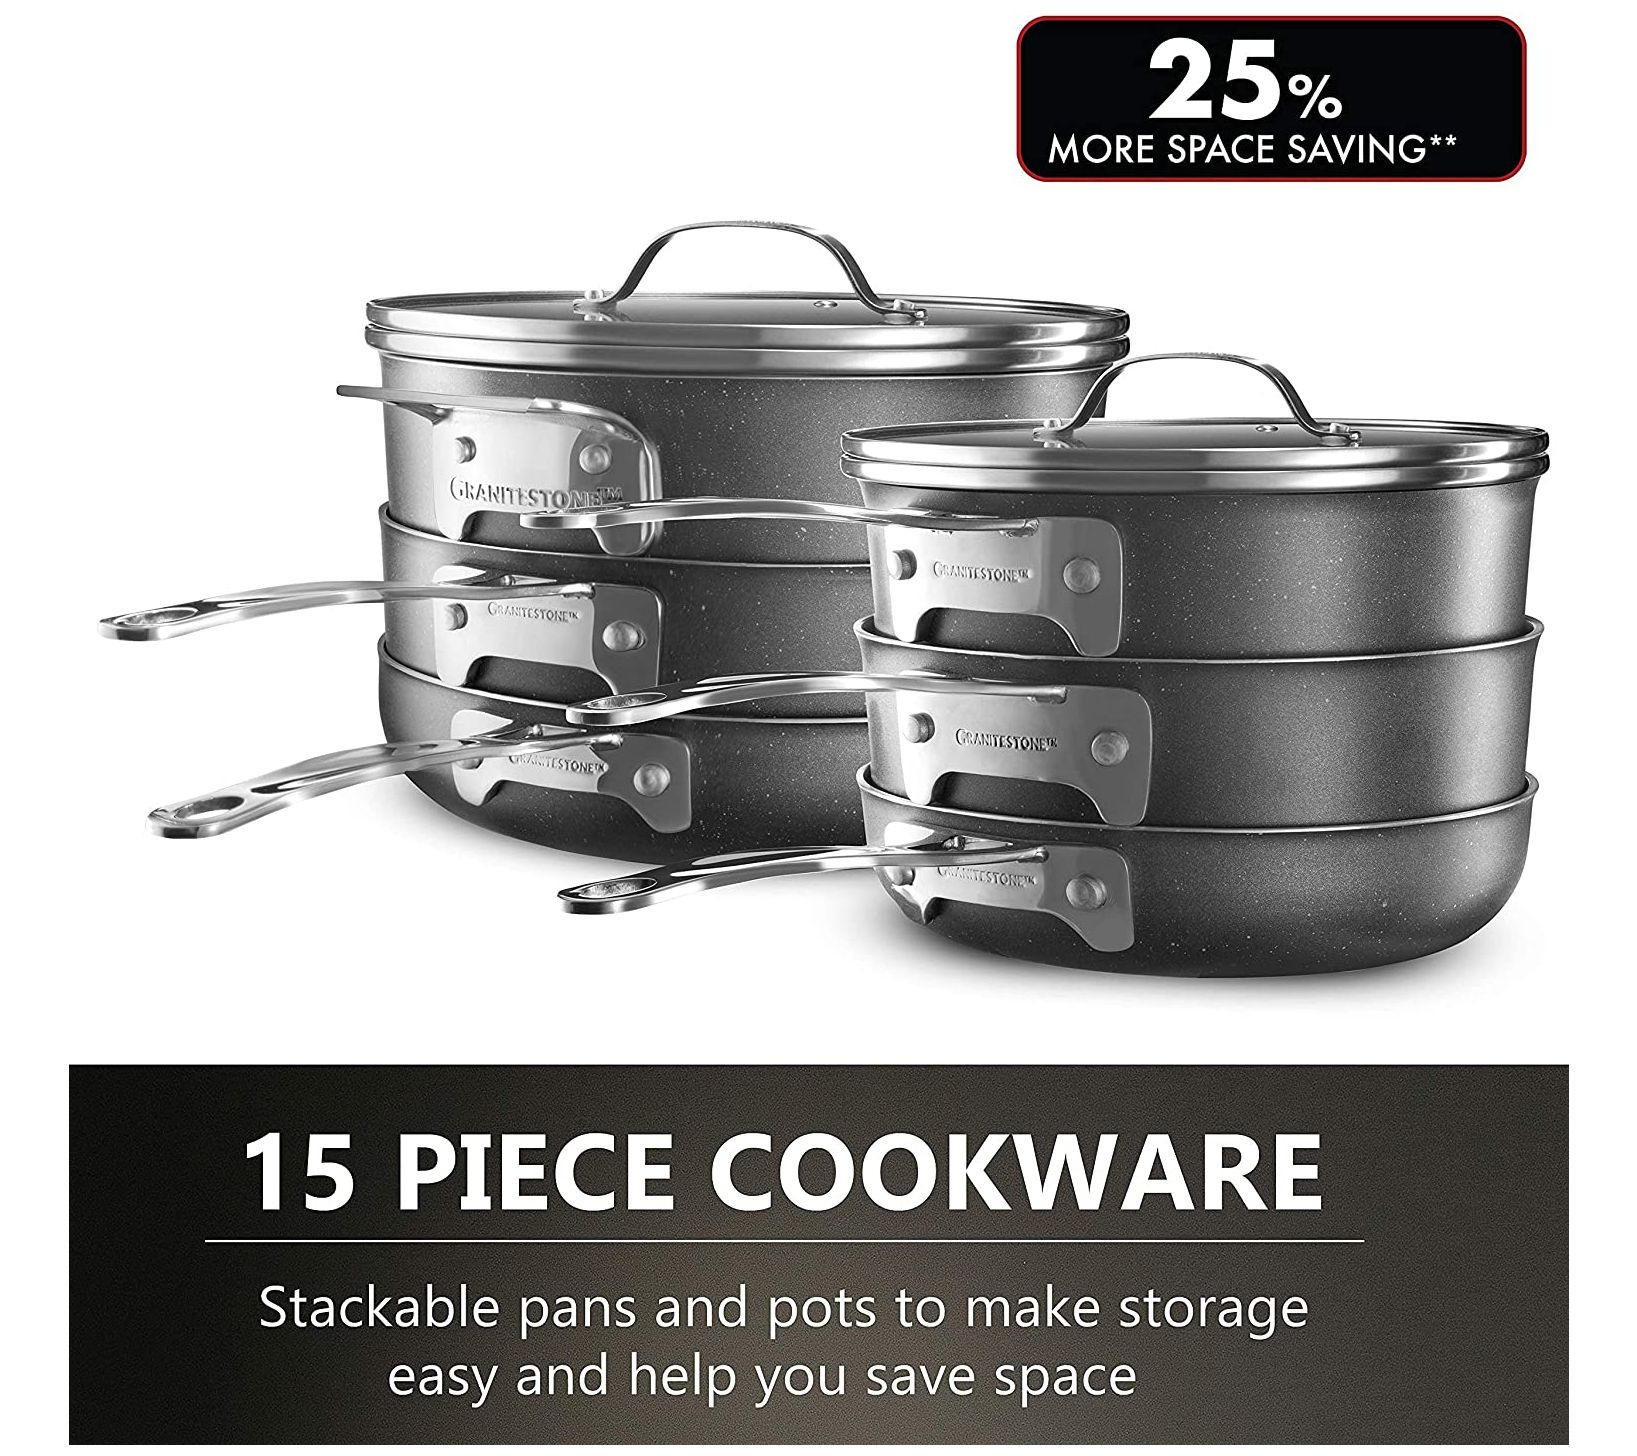 Granitestone 15-Piece Nonstick Stackmaster Cook ware Set 